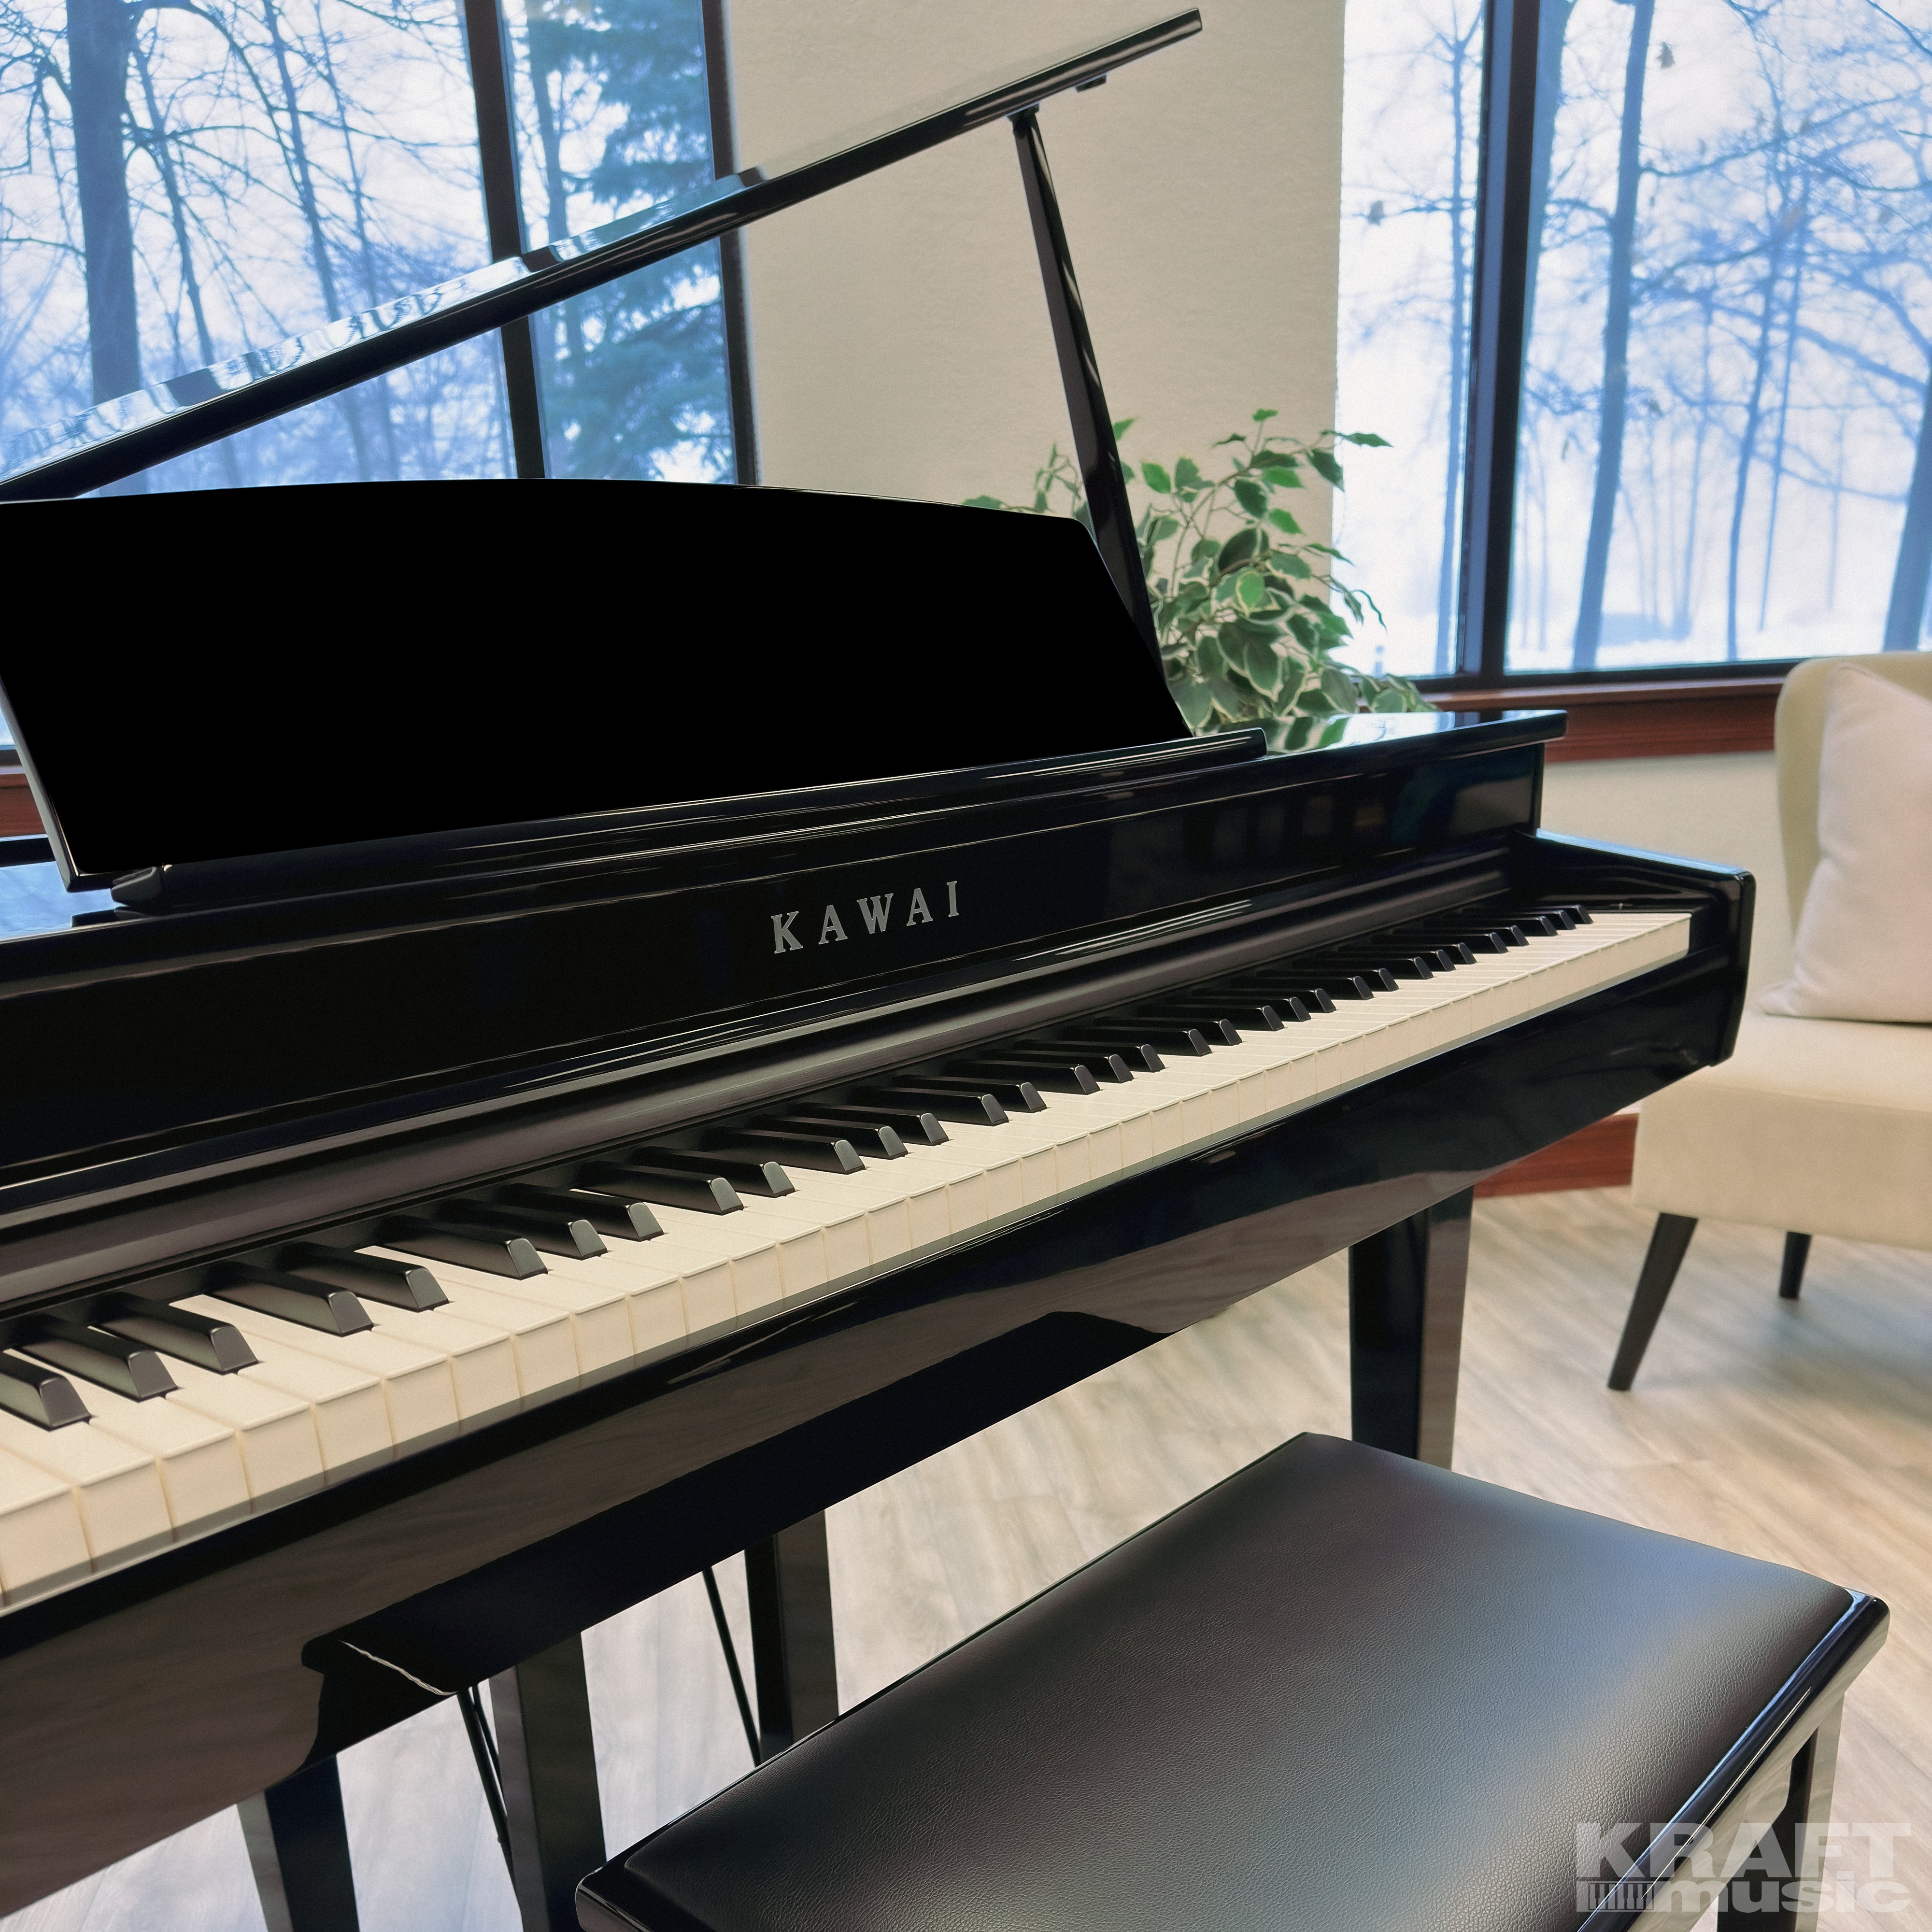 Kawai DG30 Digital Grand Piano - Ebony Polish - in a stylish music room close up of the keys